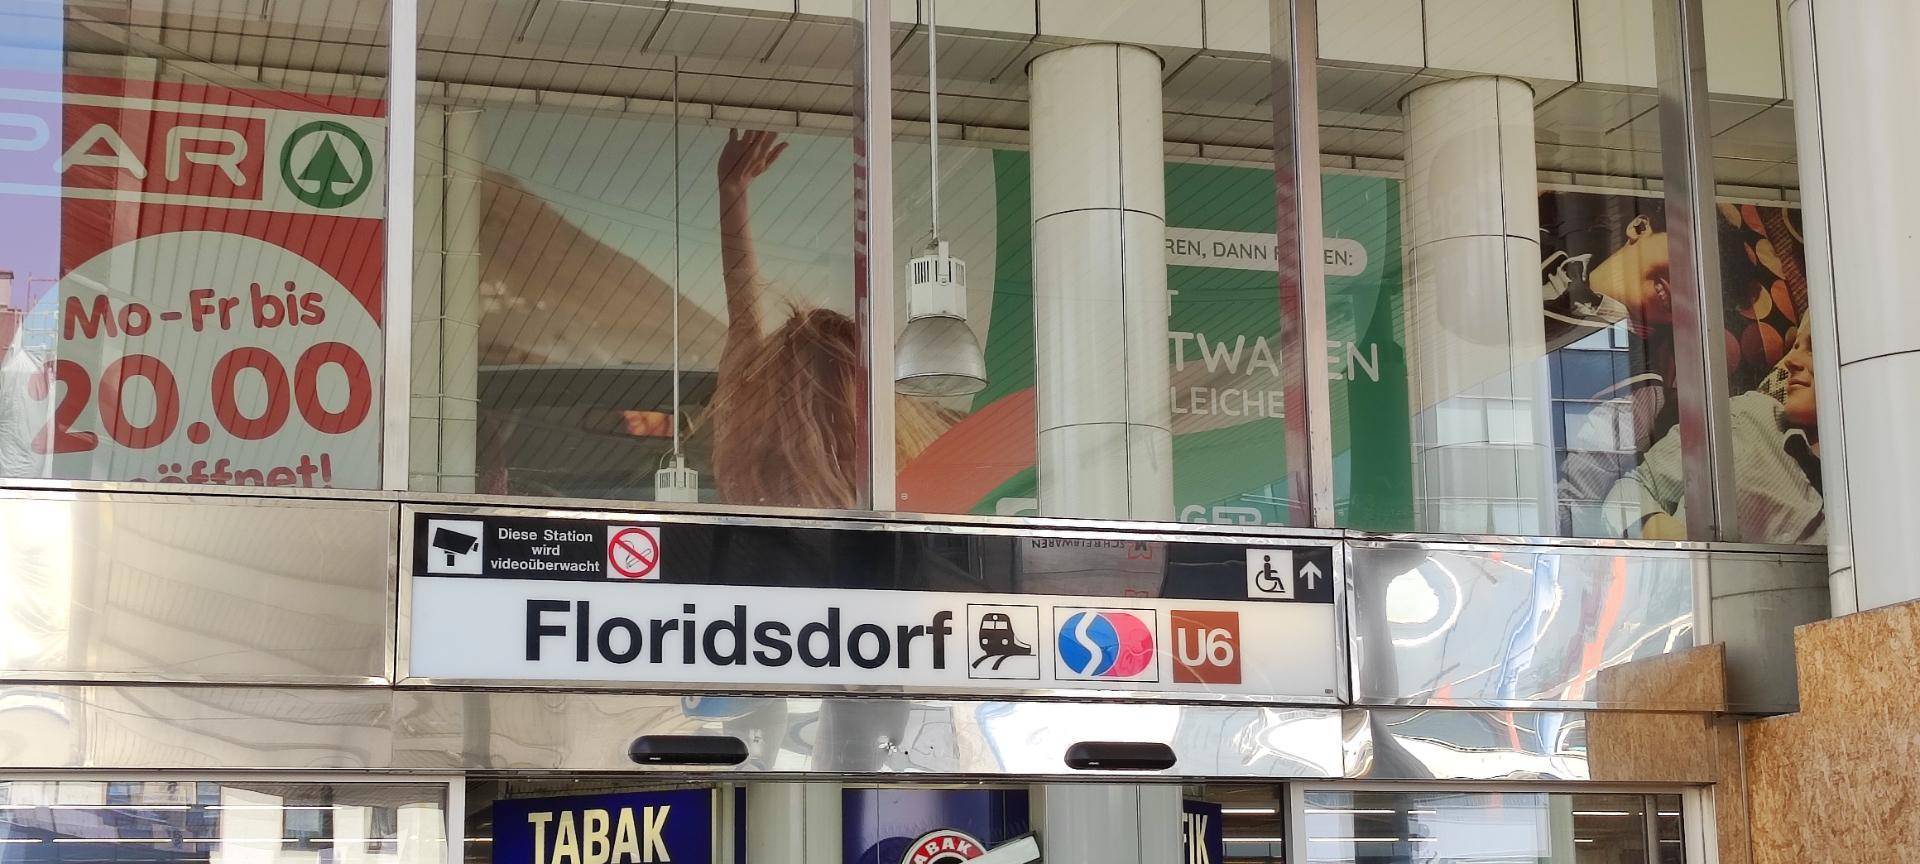 Bahnhof Floridsdorf